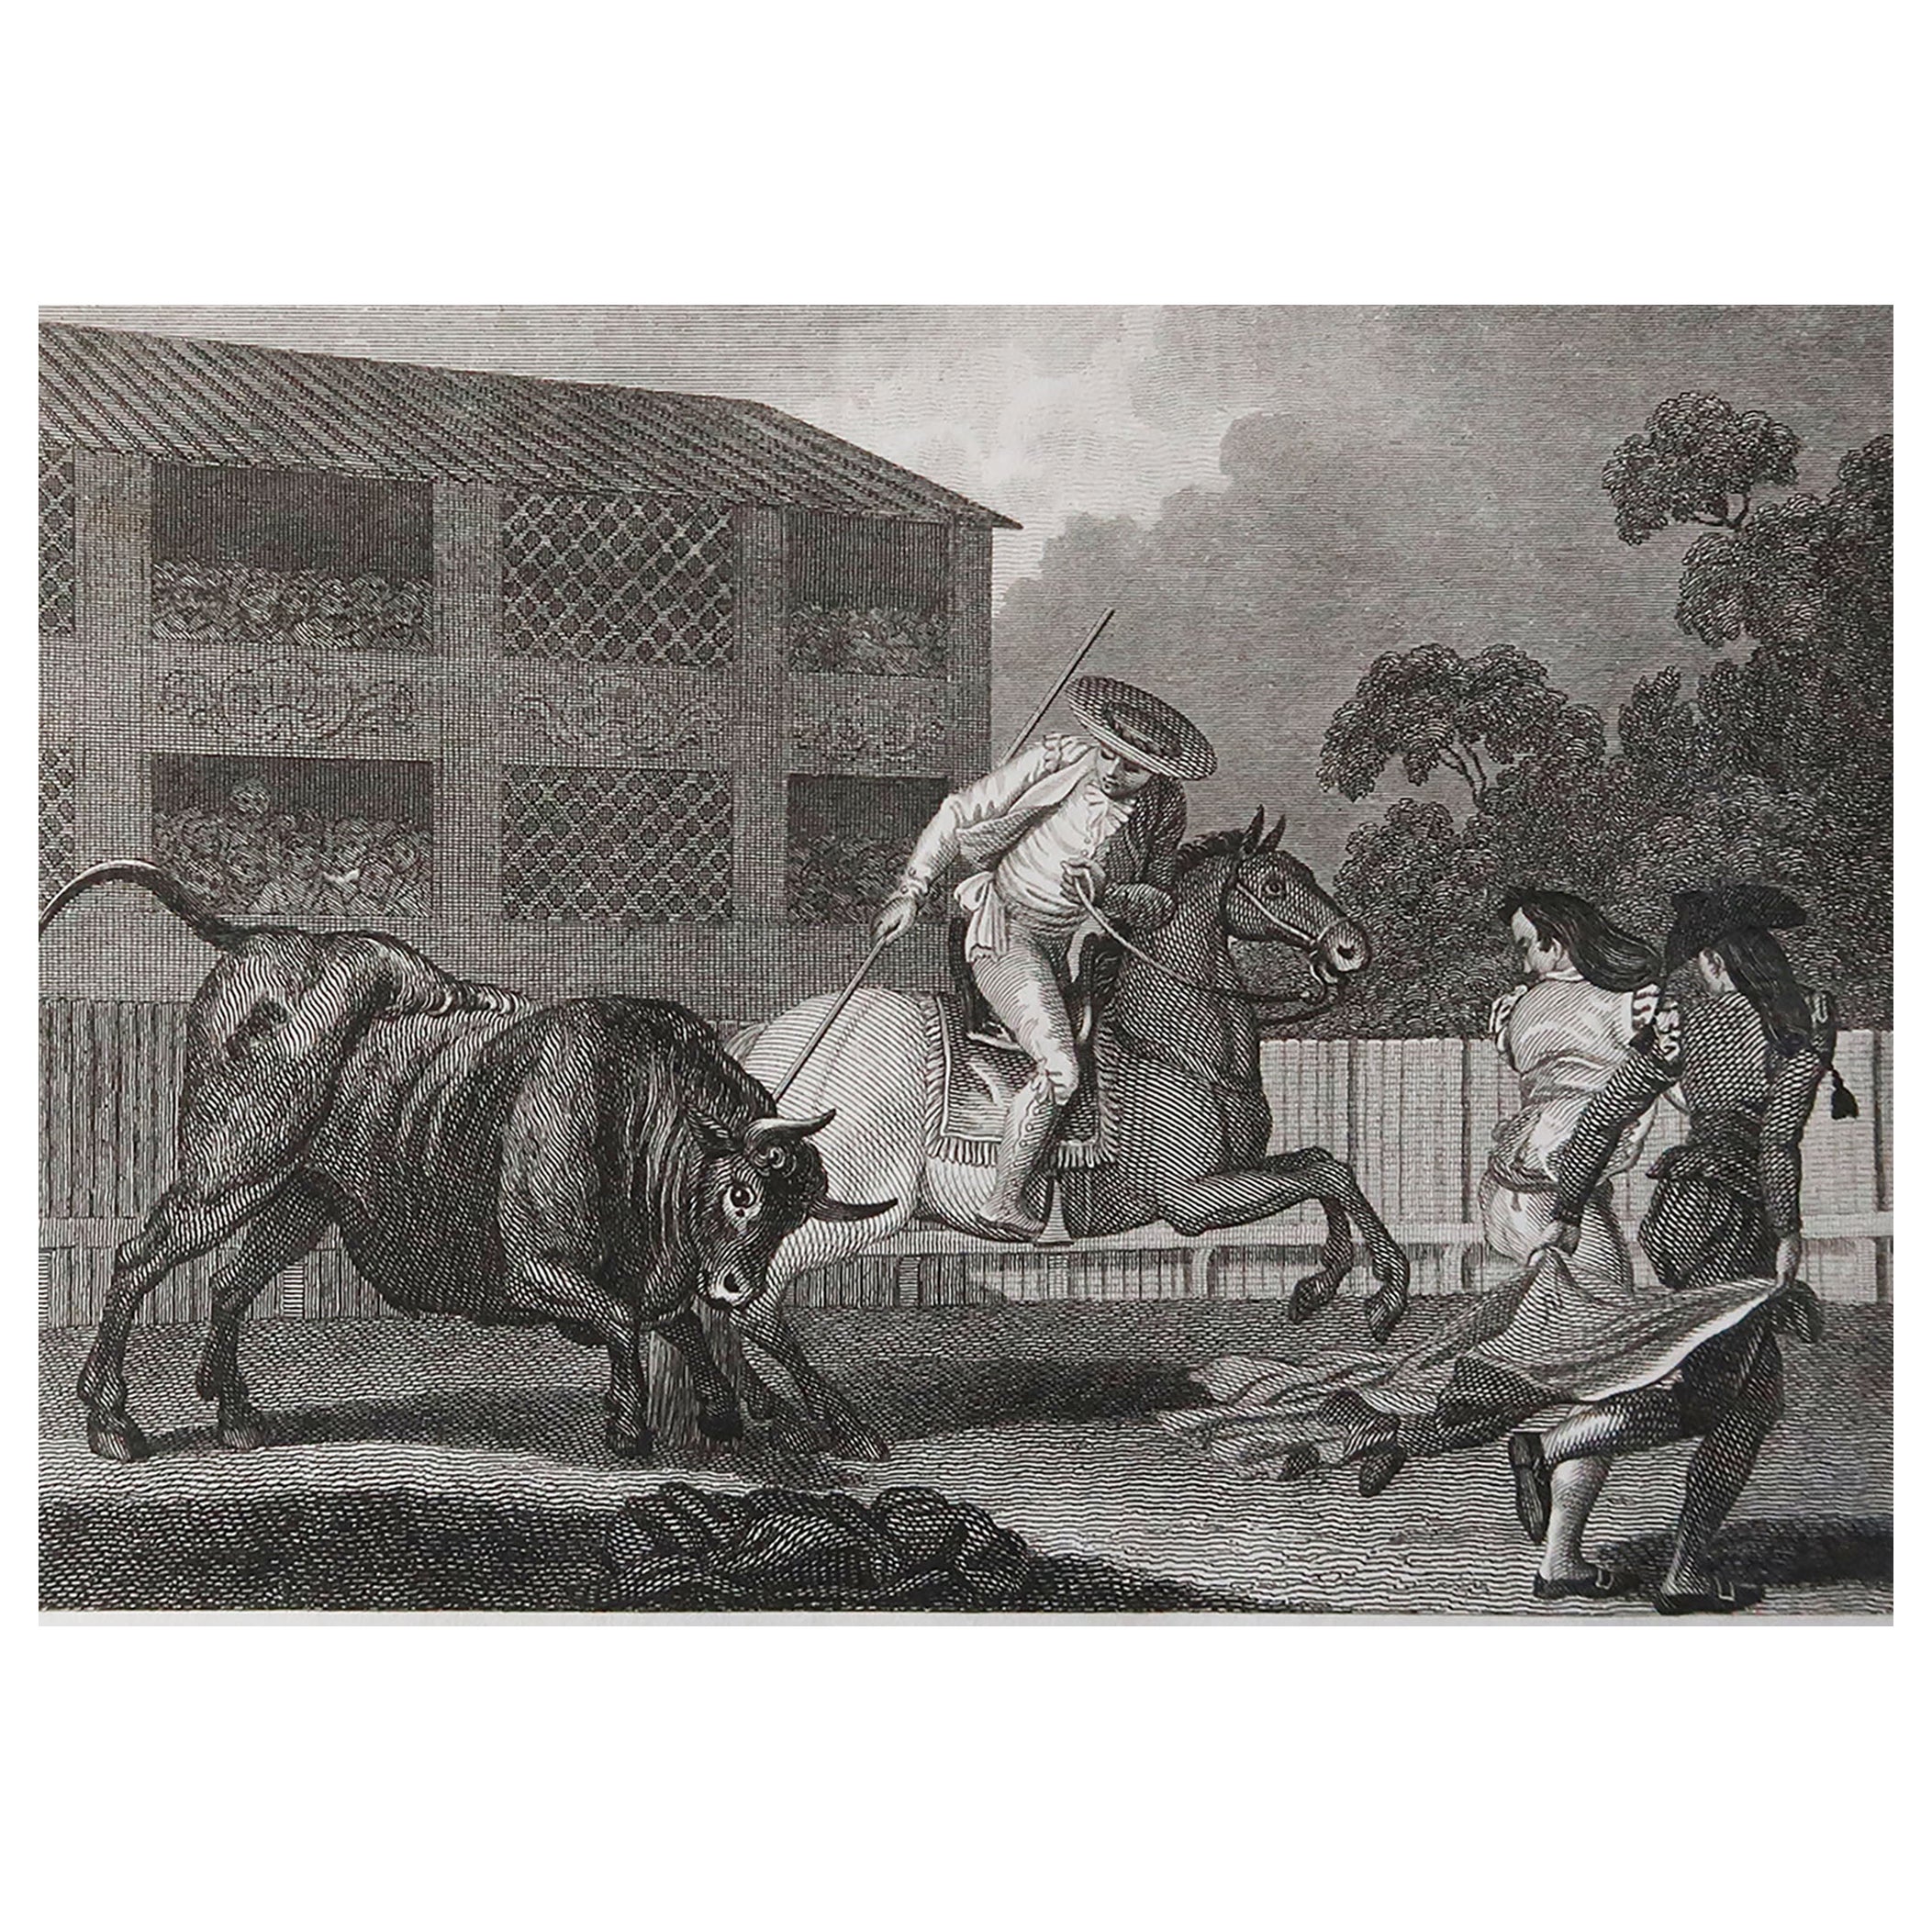 Original Antique Bullfighting Print, Dated 1805